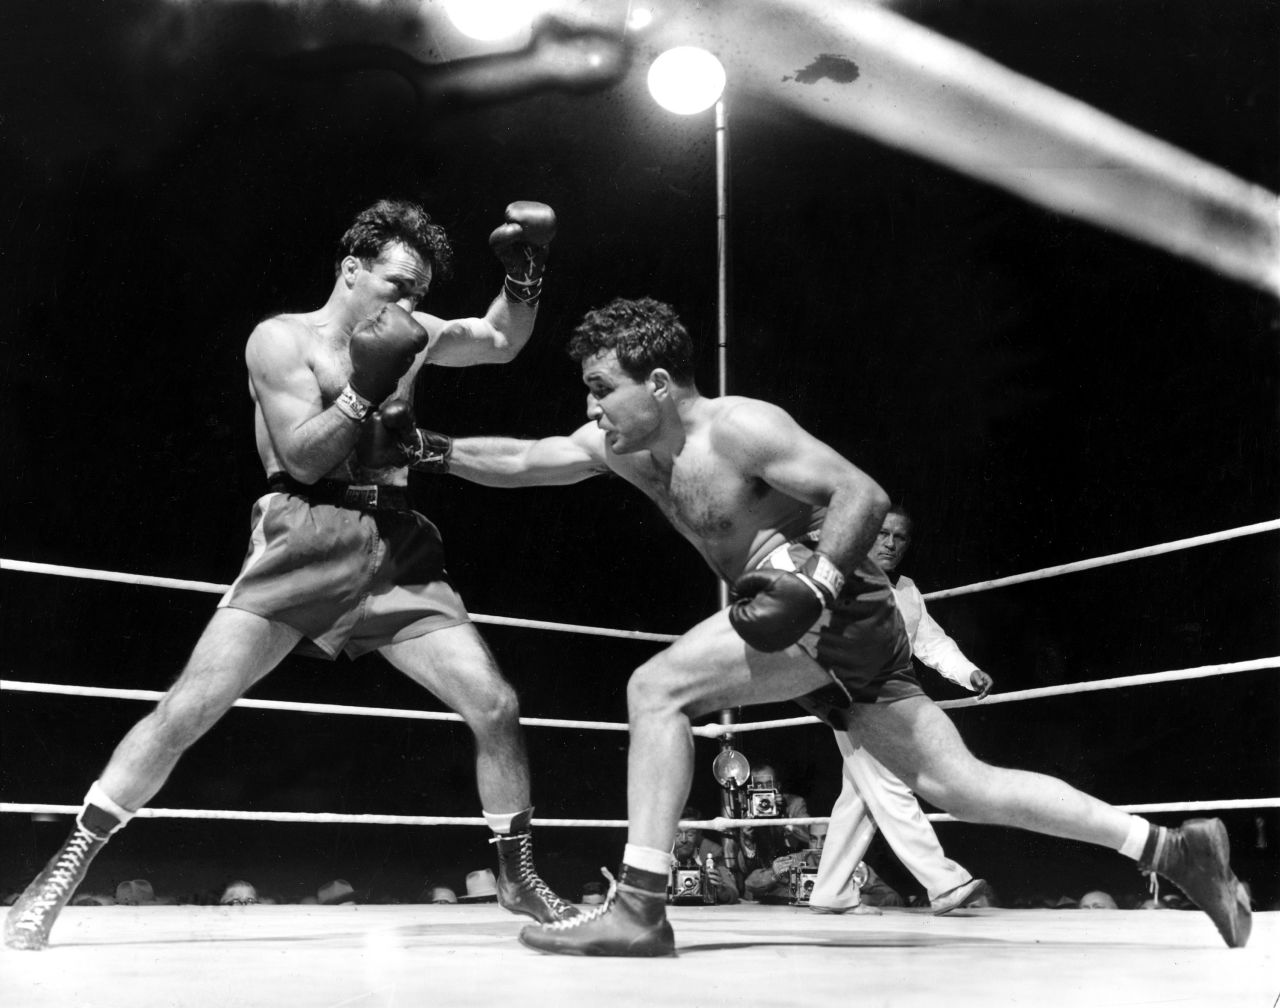 Former boxing champion <a href="http://www.cnn.com/2017/09/20/sport/jake-lamotta-obit/index.html" target="_blank">Jake LaMotta</a>, right, died September 19 at the age of 95. LaMotta was played by Robert De Niro in Martin Scorsese's Oscar-winning movie "Raging Bull."